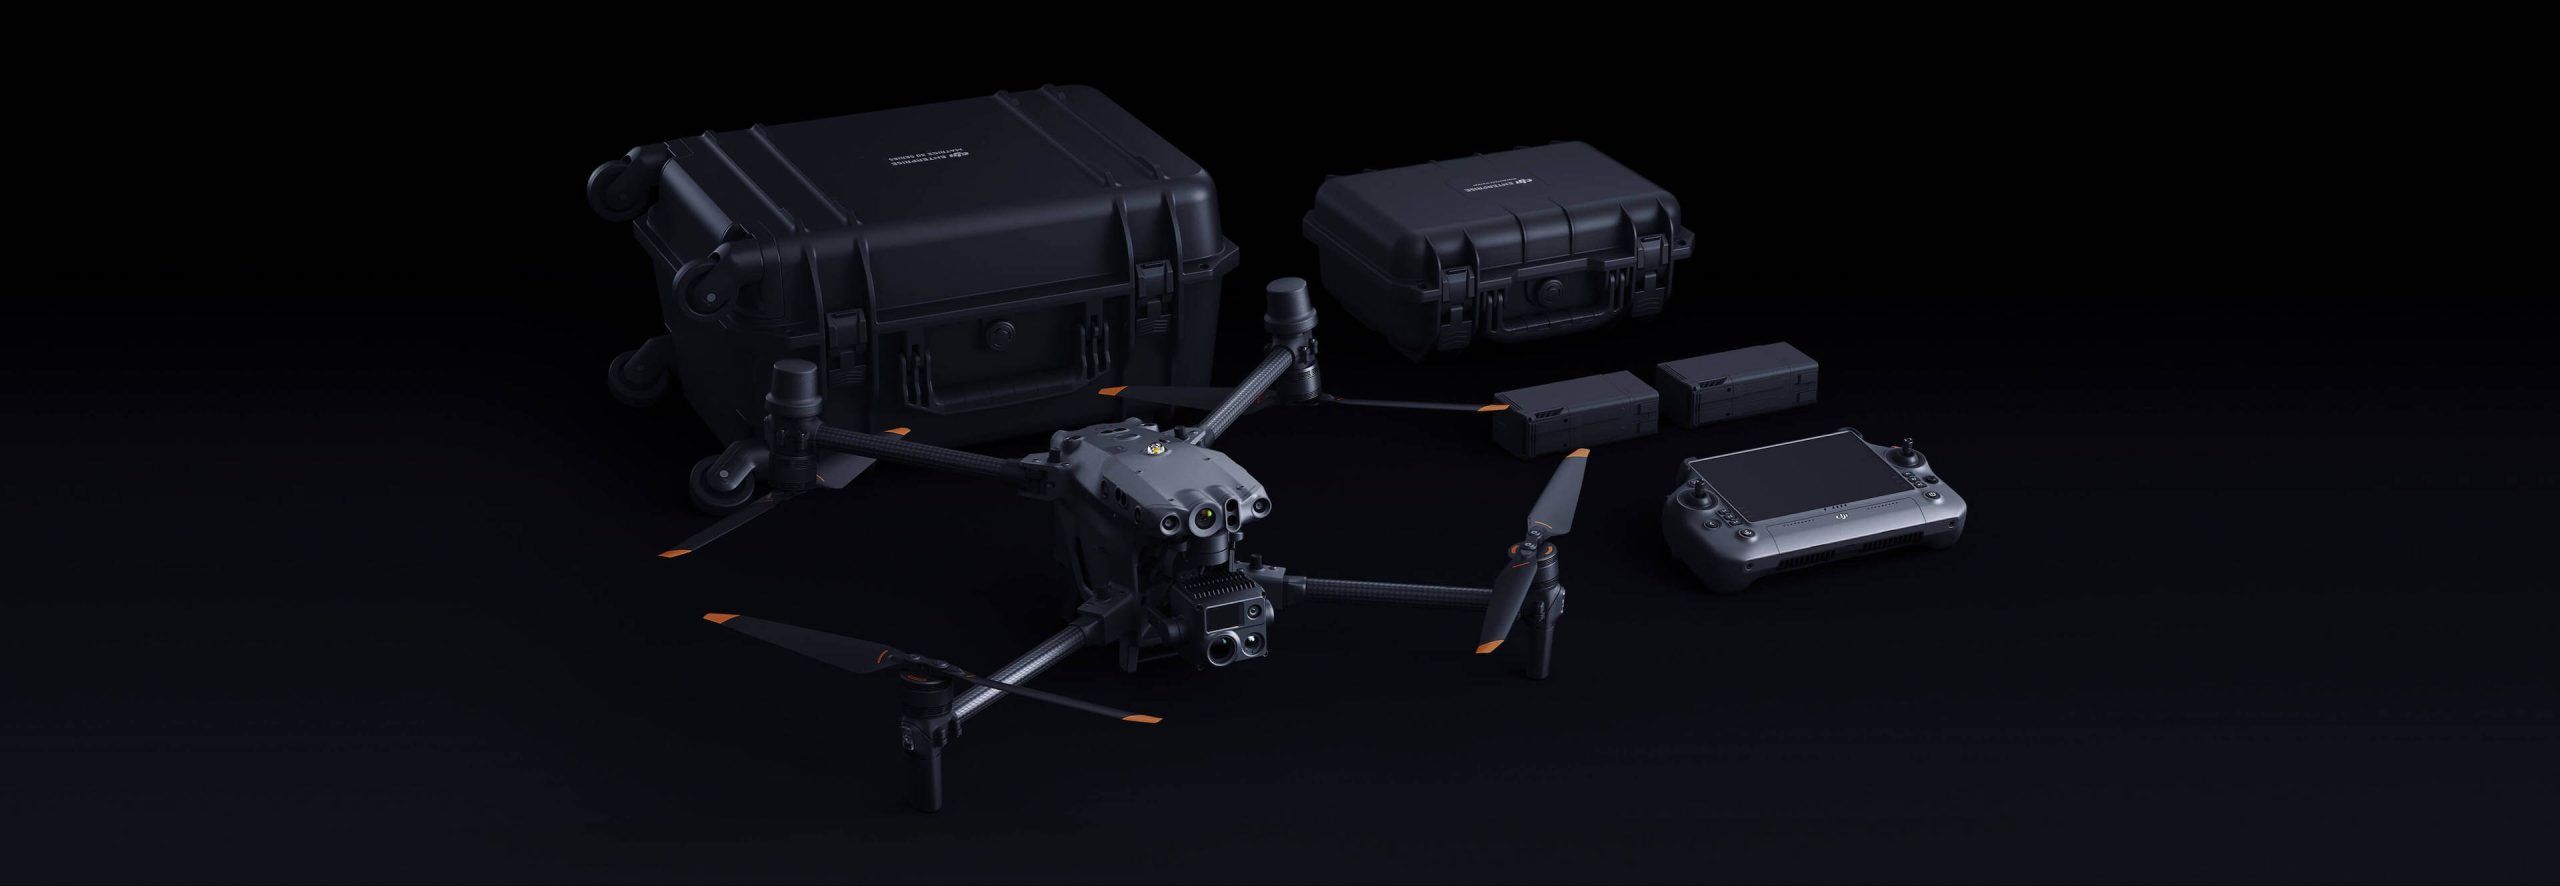 Drone DJI Matrice 30 - Pacote